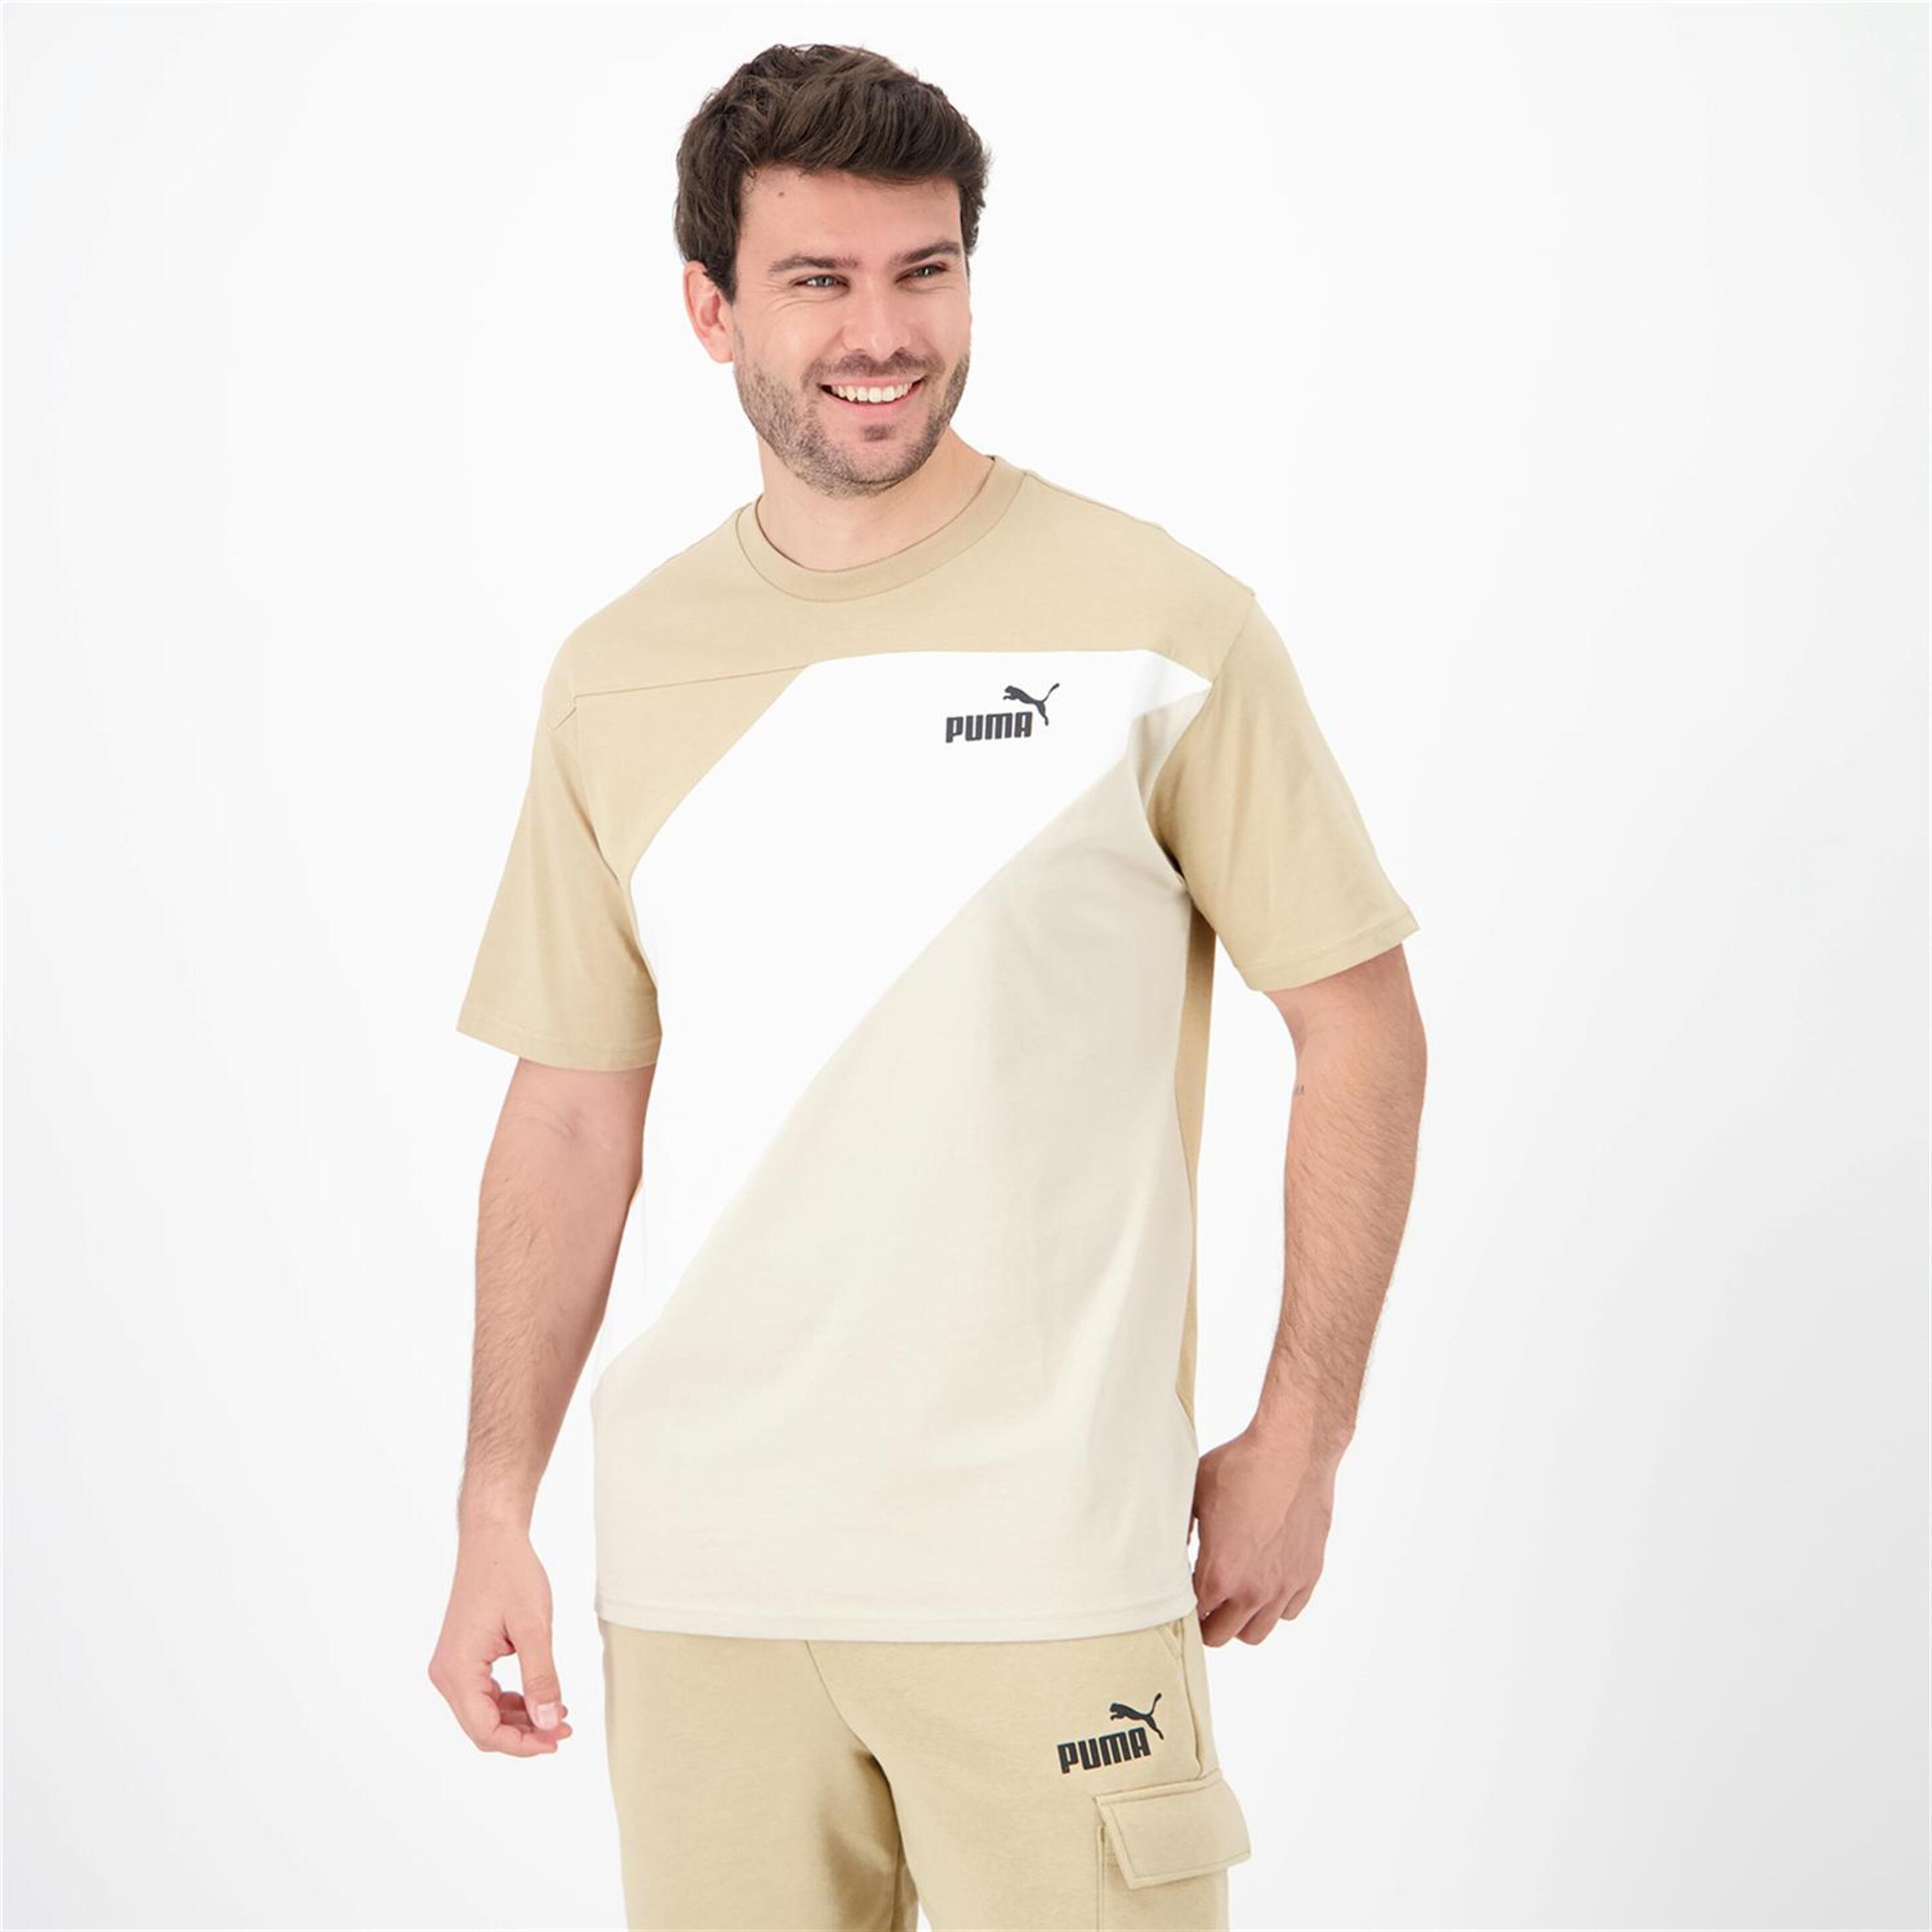 Puma Power Block - marron - T-shirt Homem